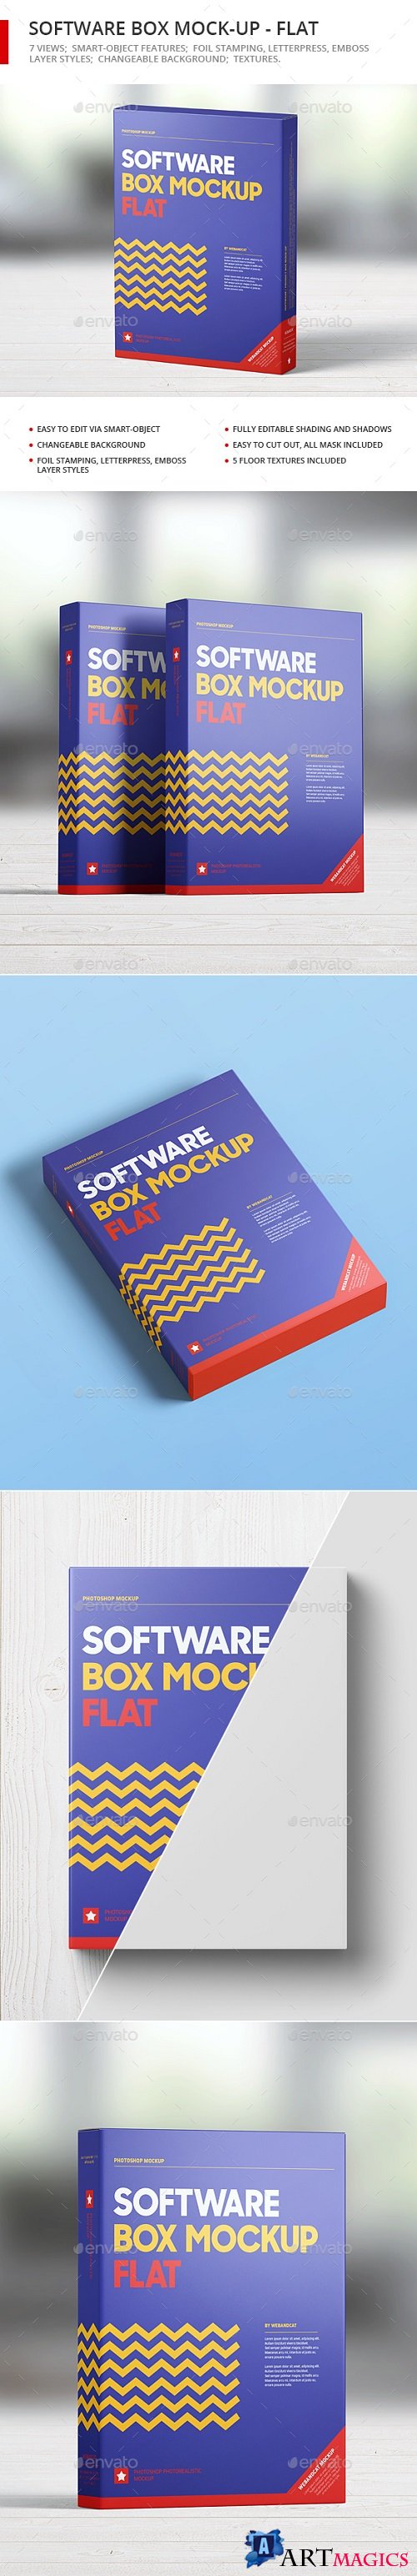 Software Box Mock-up - Flat - 21262209